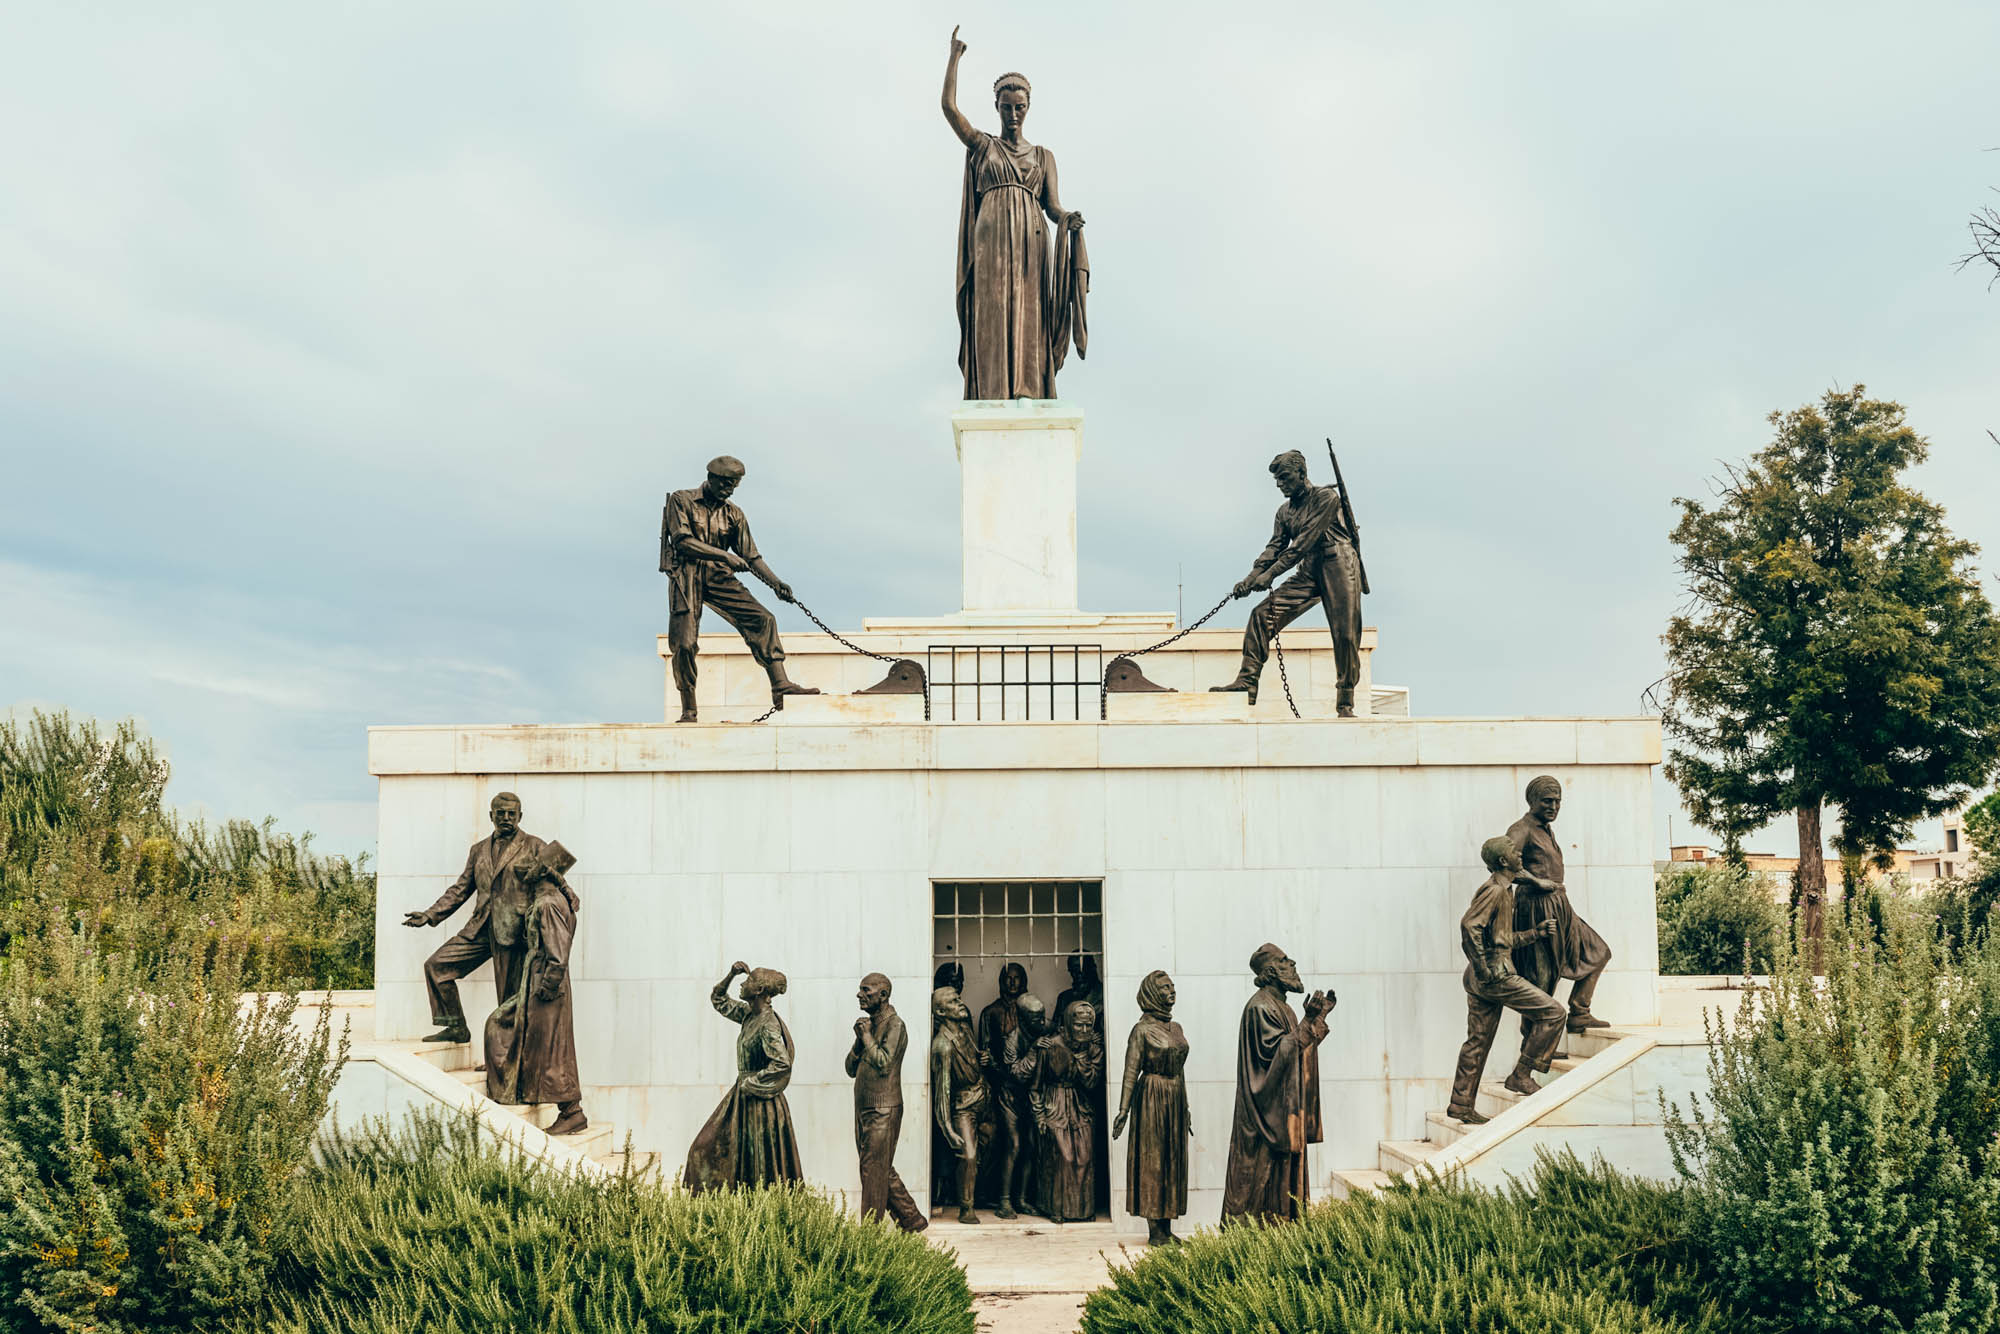 Spomenik slobode je spomenik koji se nalazi u glavnom gradu Republike Kipra - Nikozija